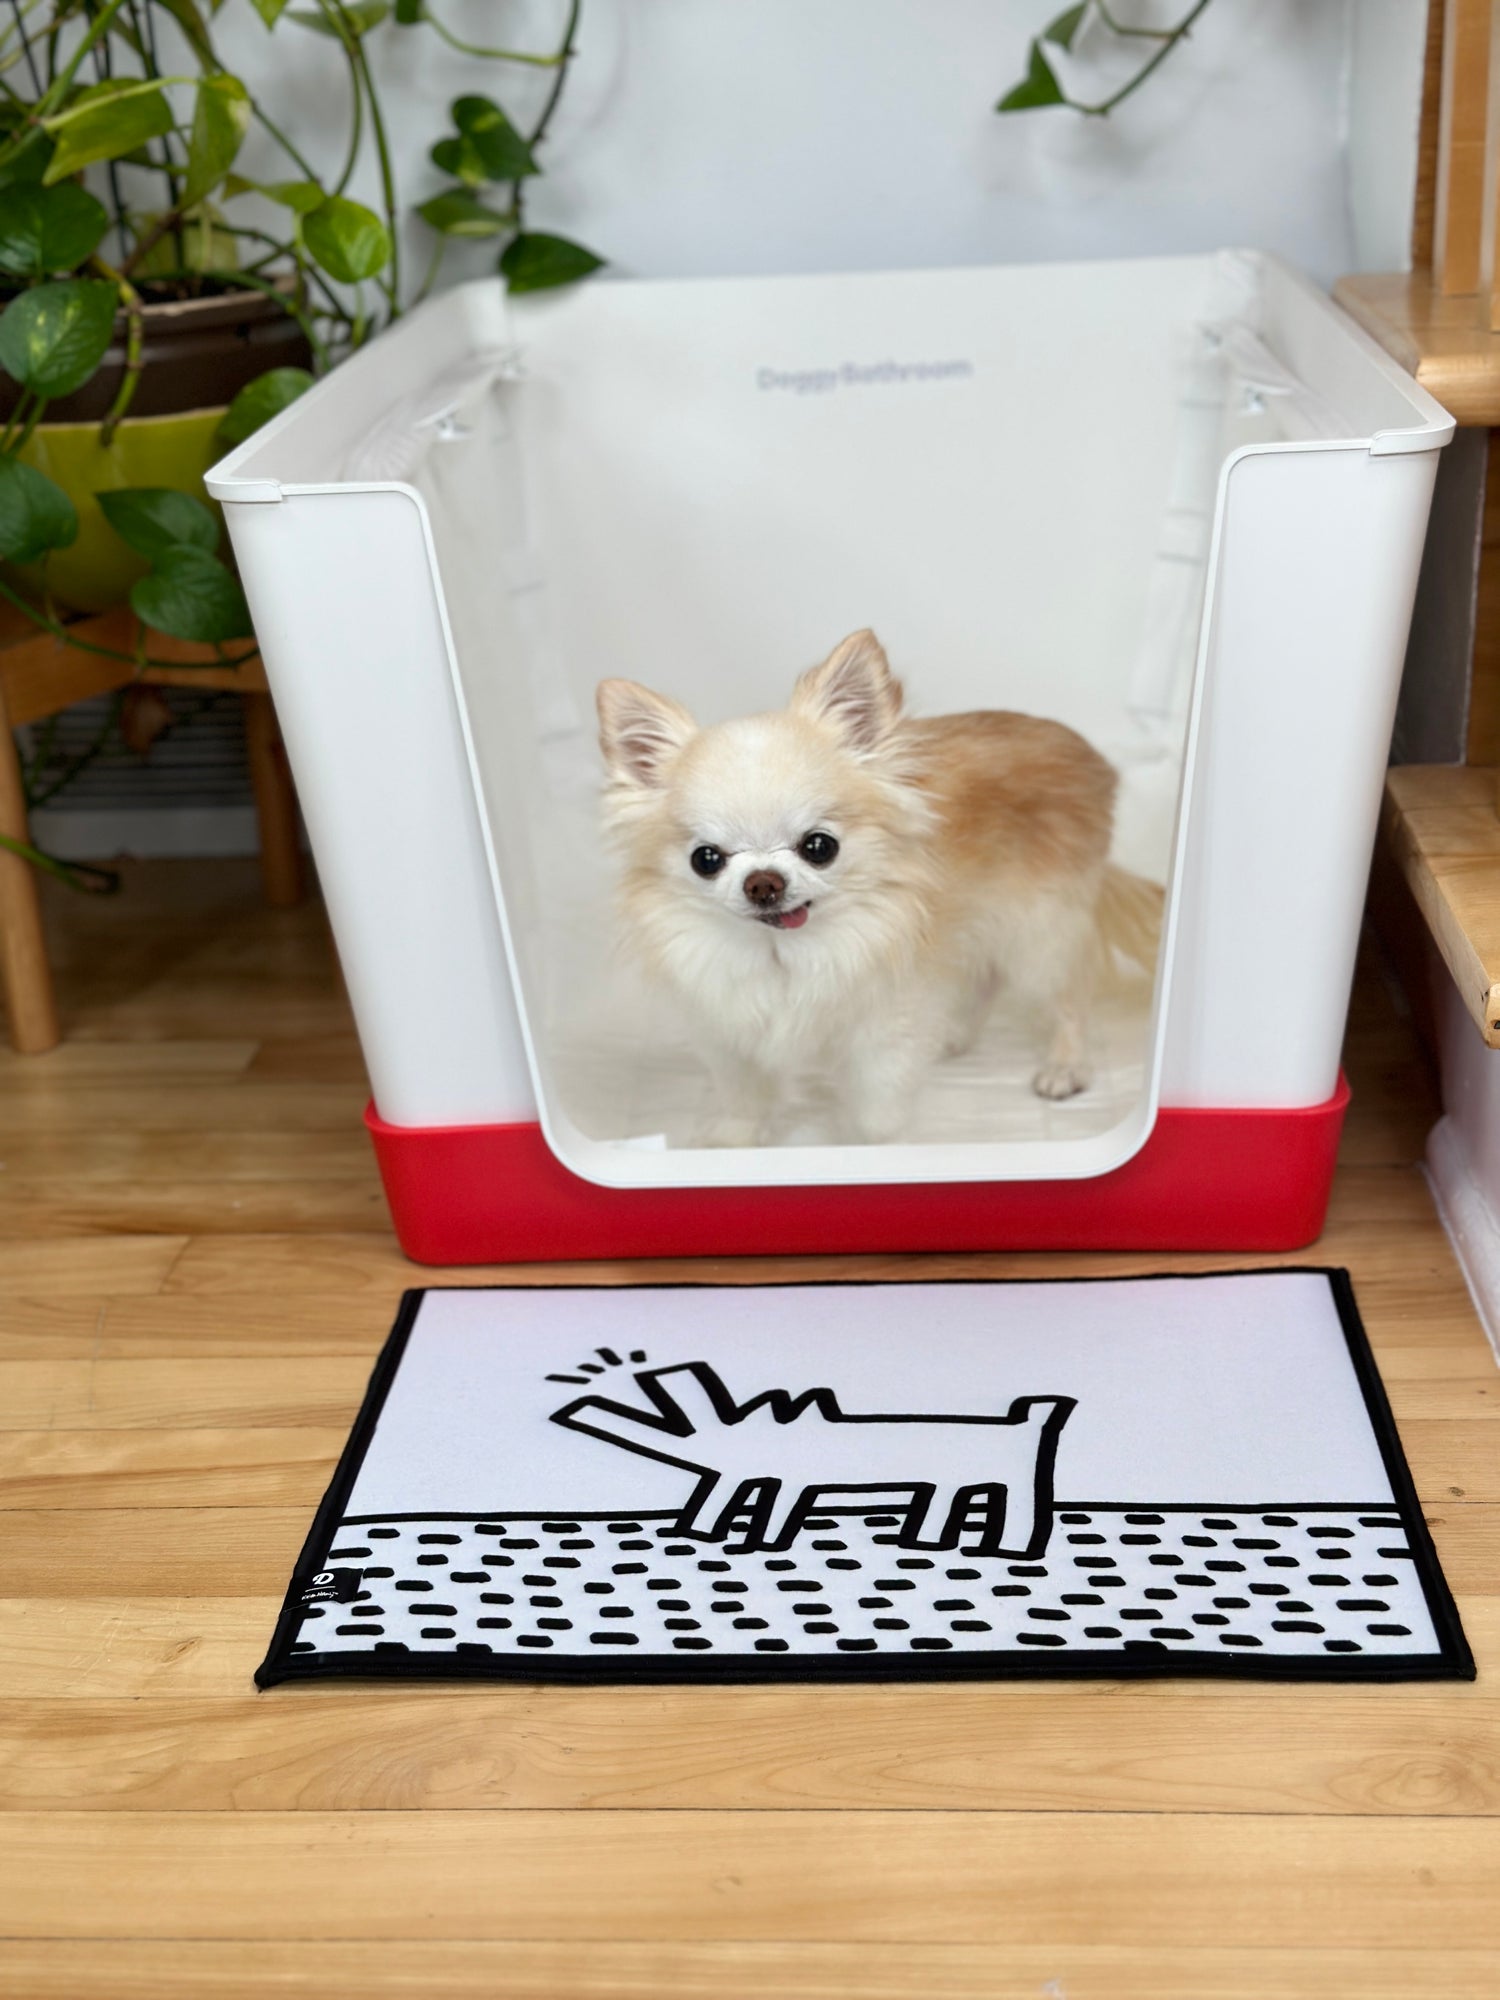 The Doggy Bathroom - Tiny Chihuahua Shop